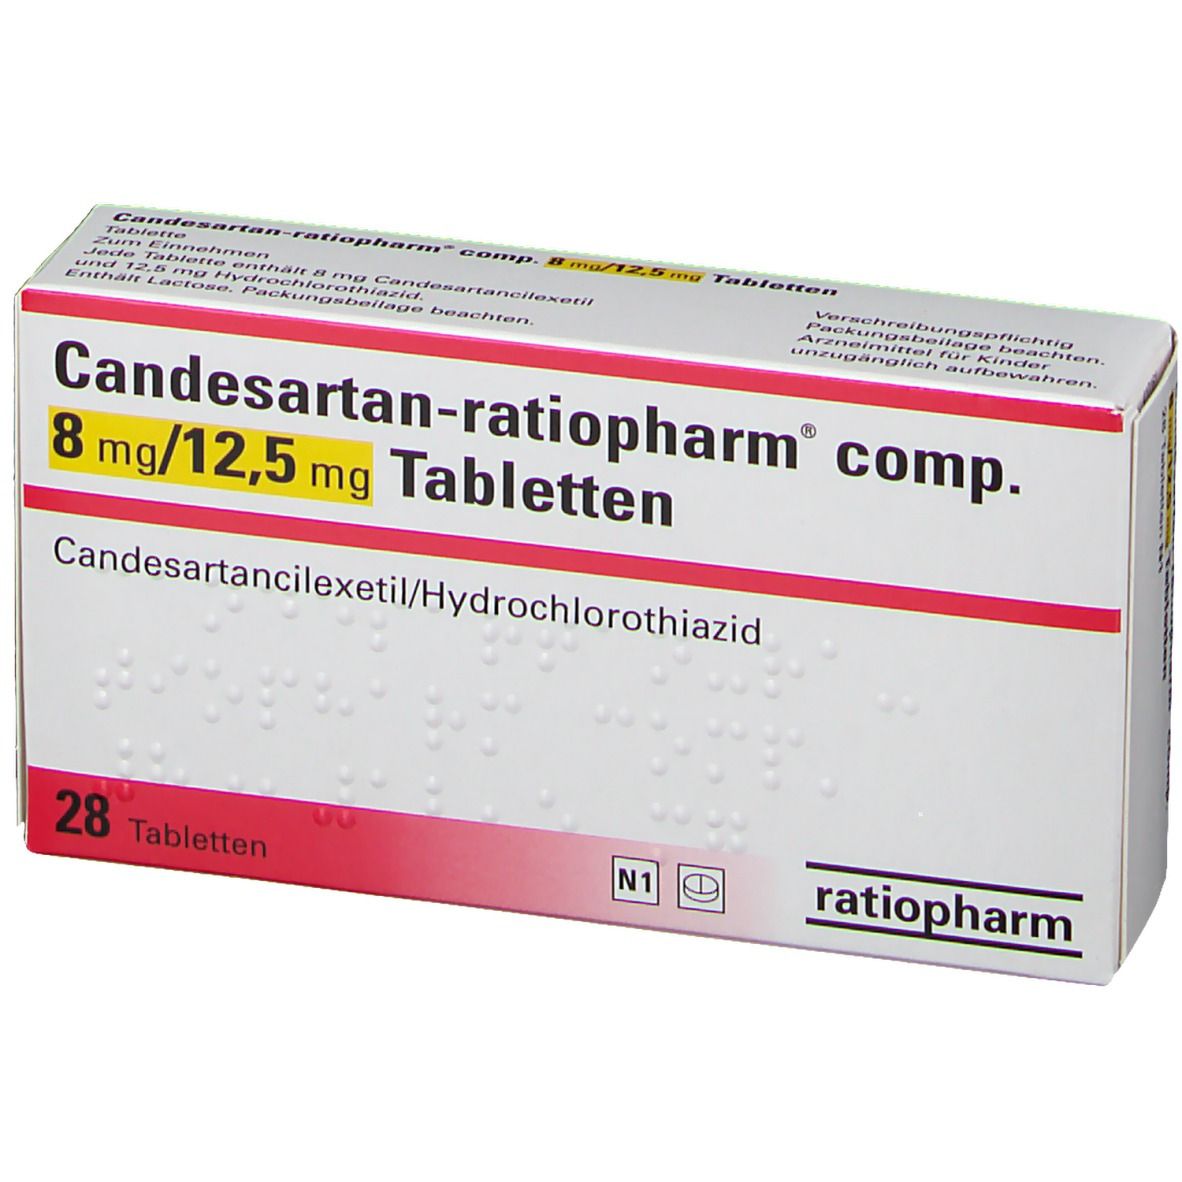 Candesartan-ratiopharm® comp. 8 mg/12,5 mg